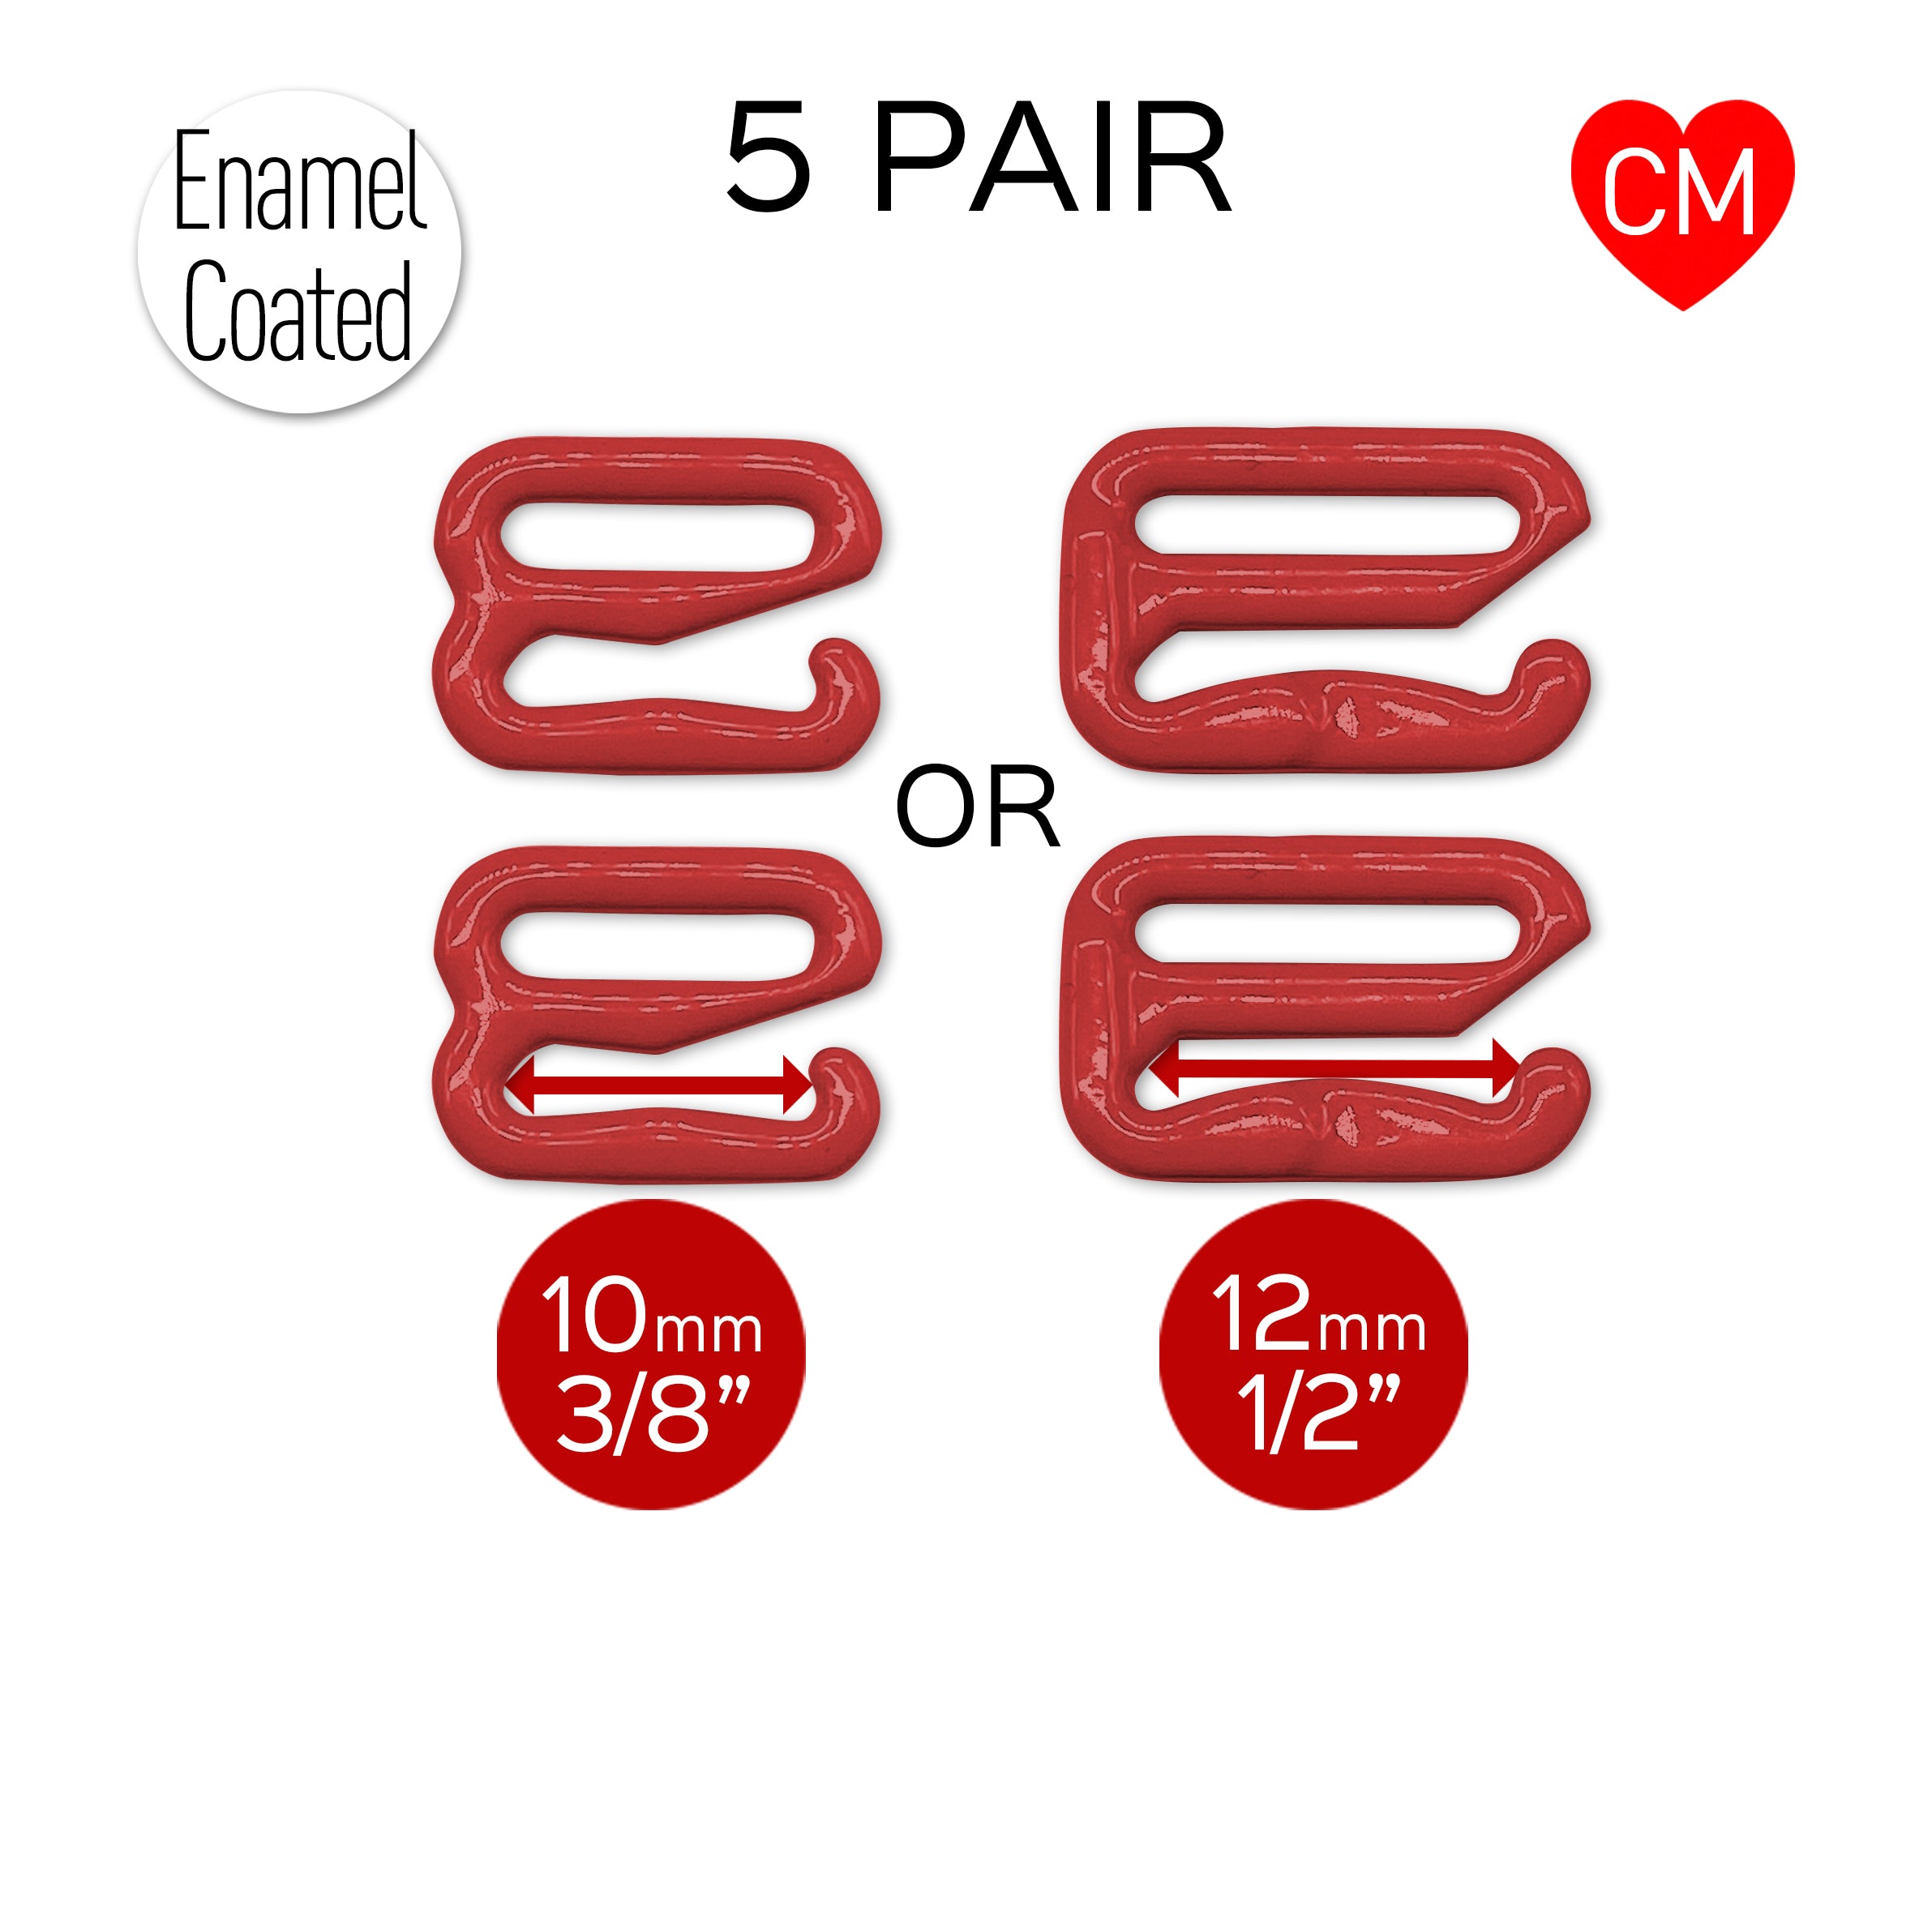 CLEARANCE- 5 Pair of Bra Strap Slider G Hooks in Enamel Coated Regal Red for Swimwear or Bra making- 3/8" or 1/2"